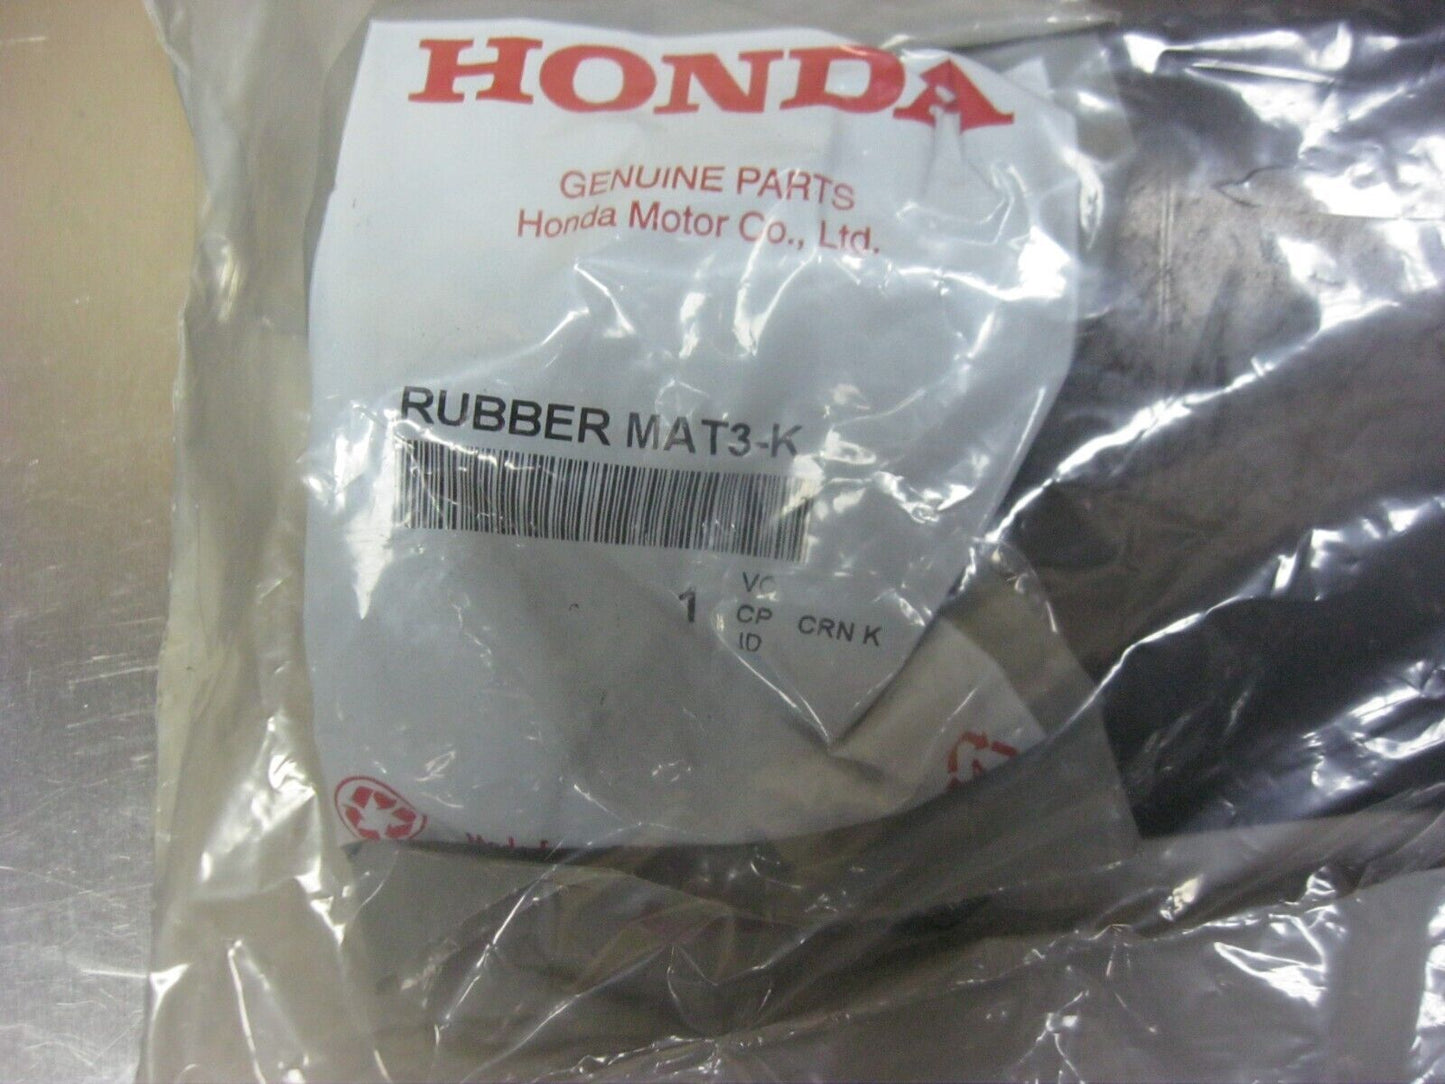 Honda OEM Rubber MAT3-K